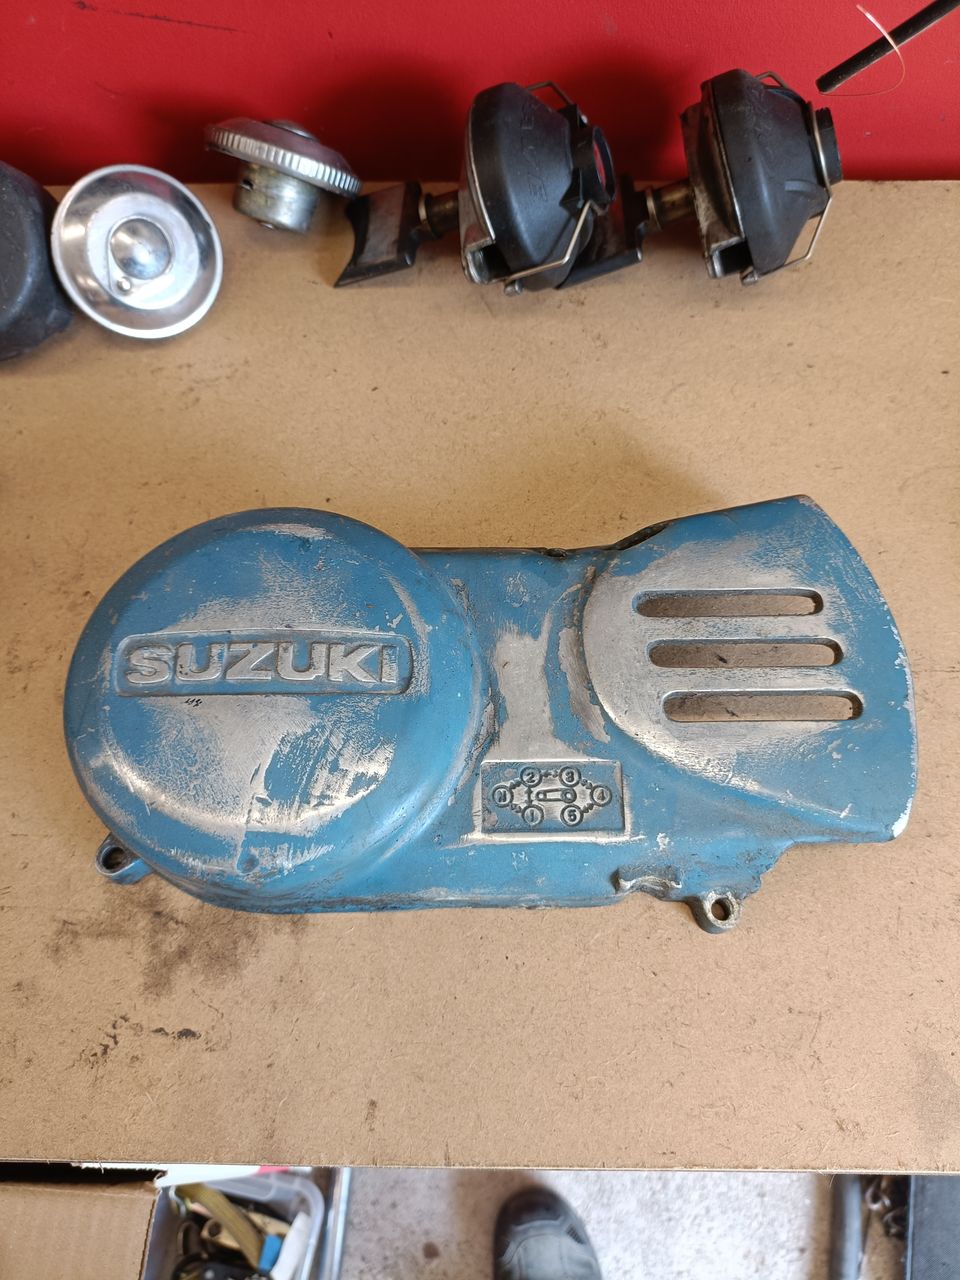 Suzuki pv magneetonkoppa